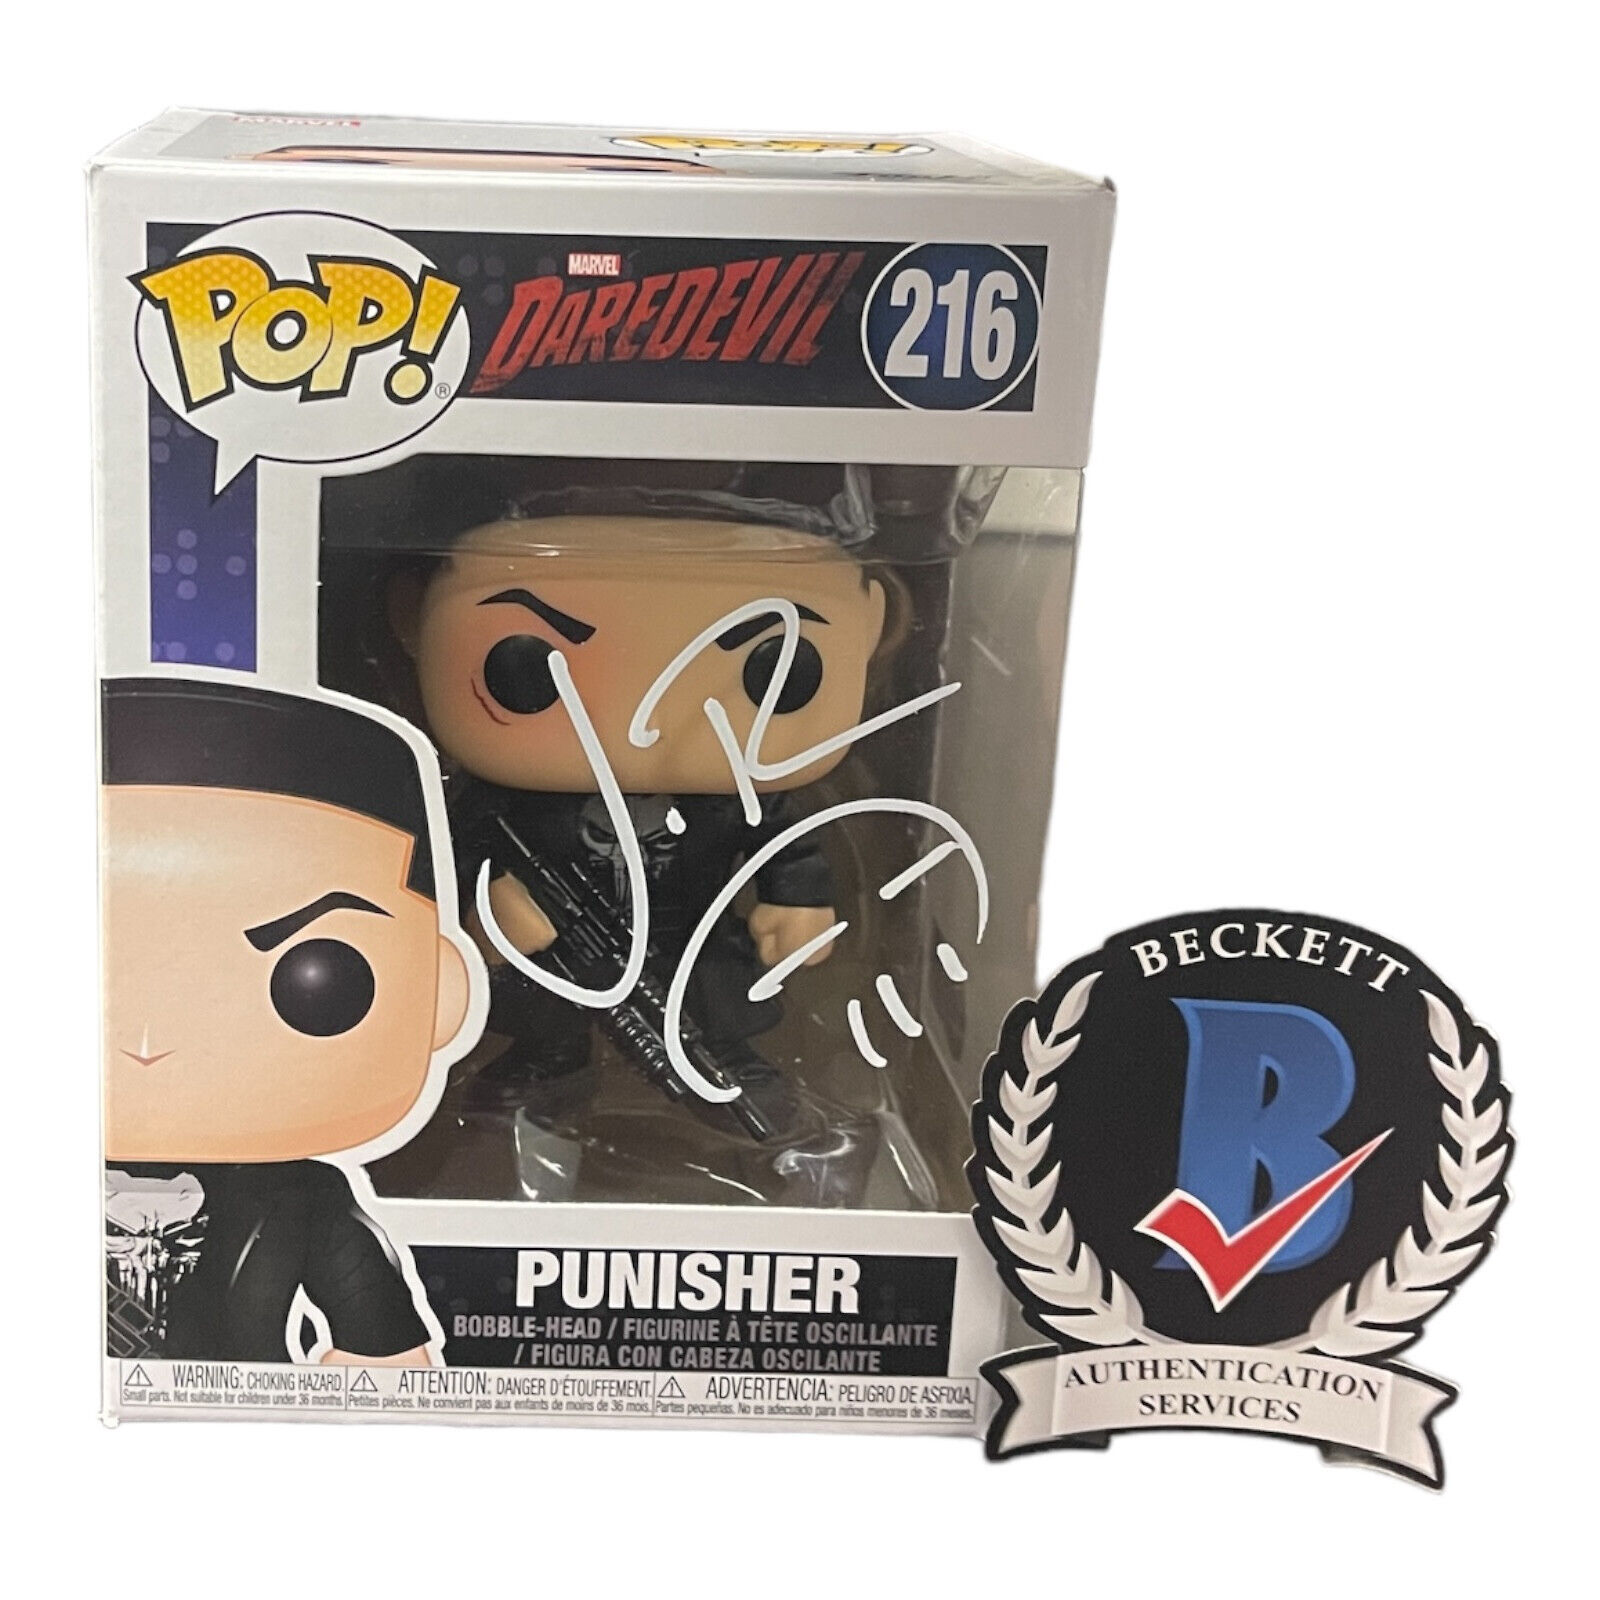 Jon Bernthal Signed Autograph The Punisher Funko Pop 216 Beckett BAS Marvel